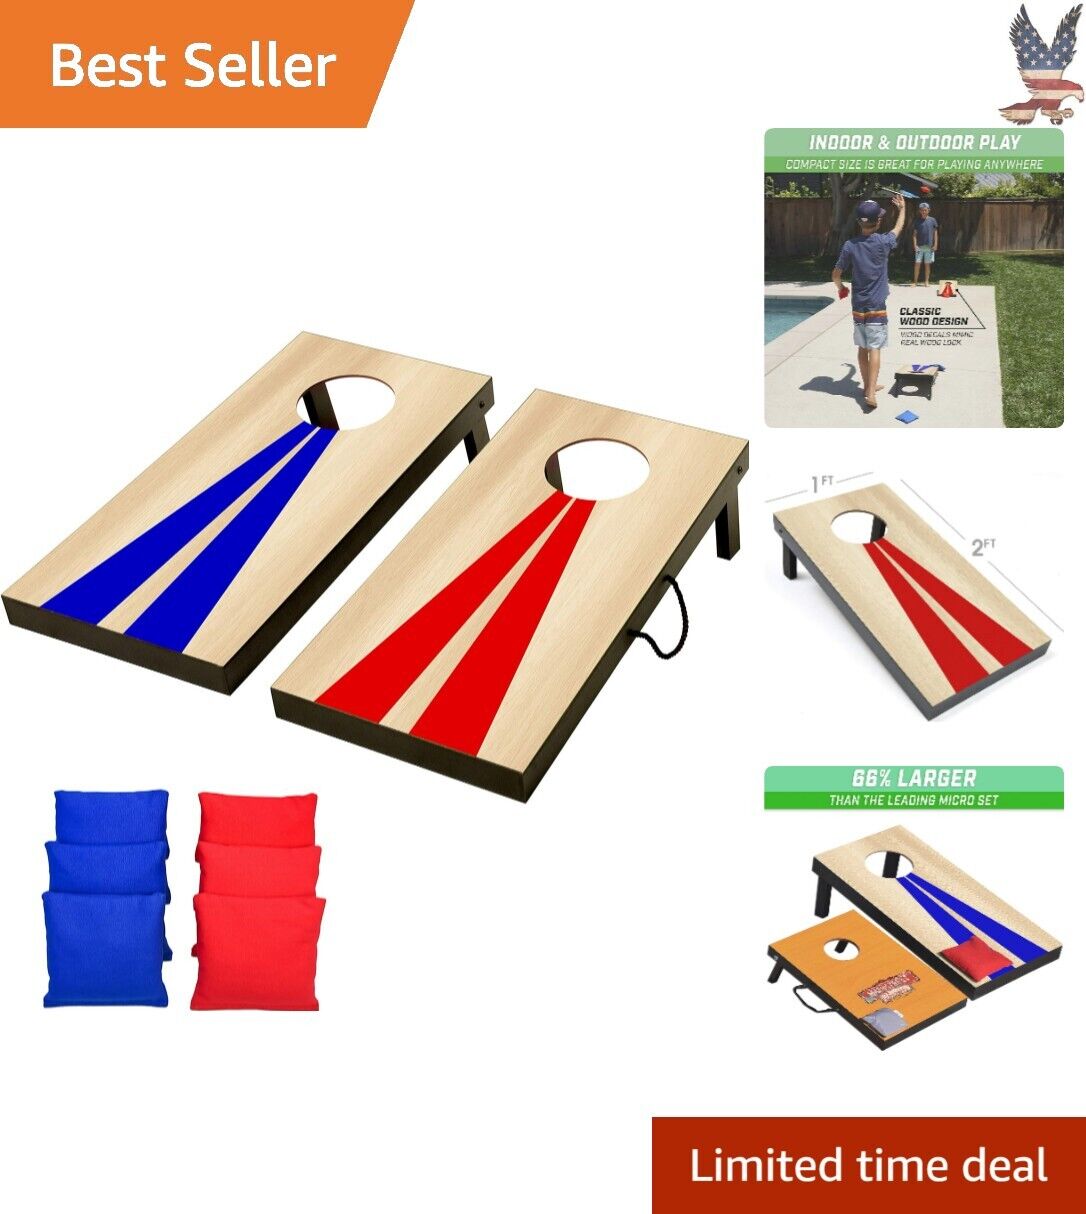 Premium Wood Cornhole Game Set - 2 Boards, 6 Bean Bags - Indoor & Outdoor Fun